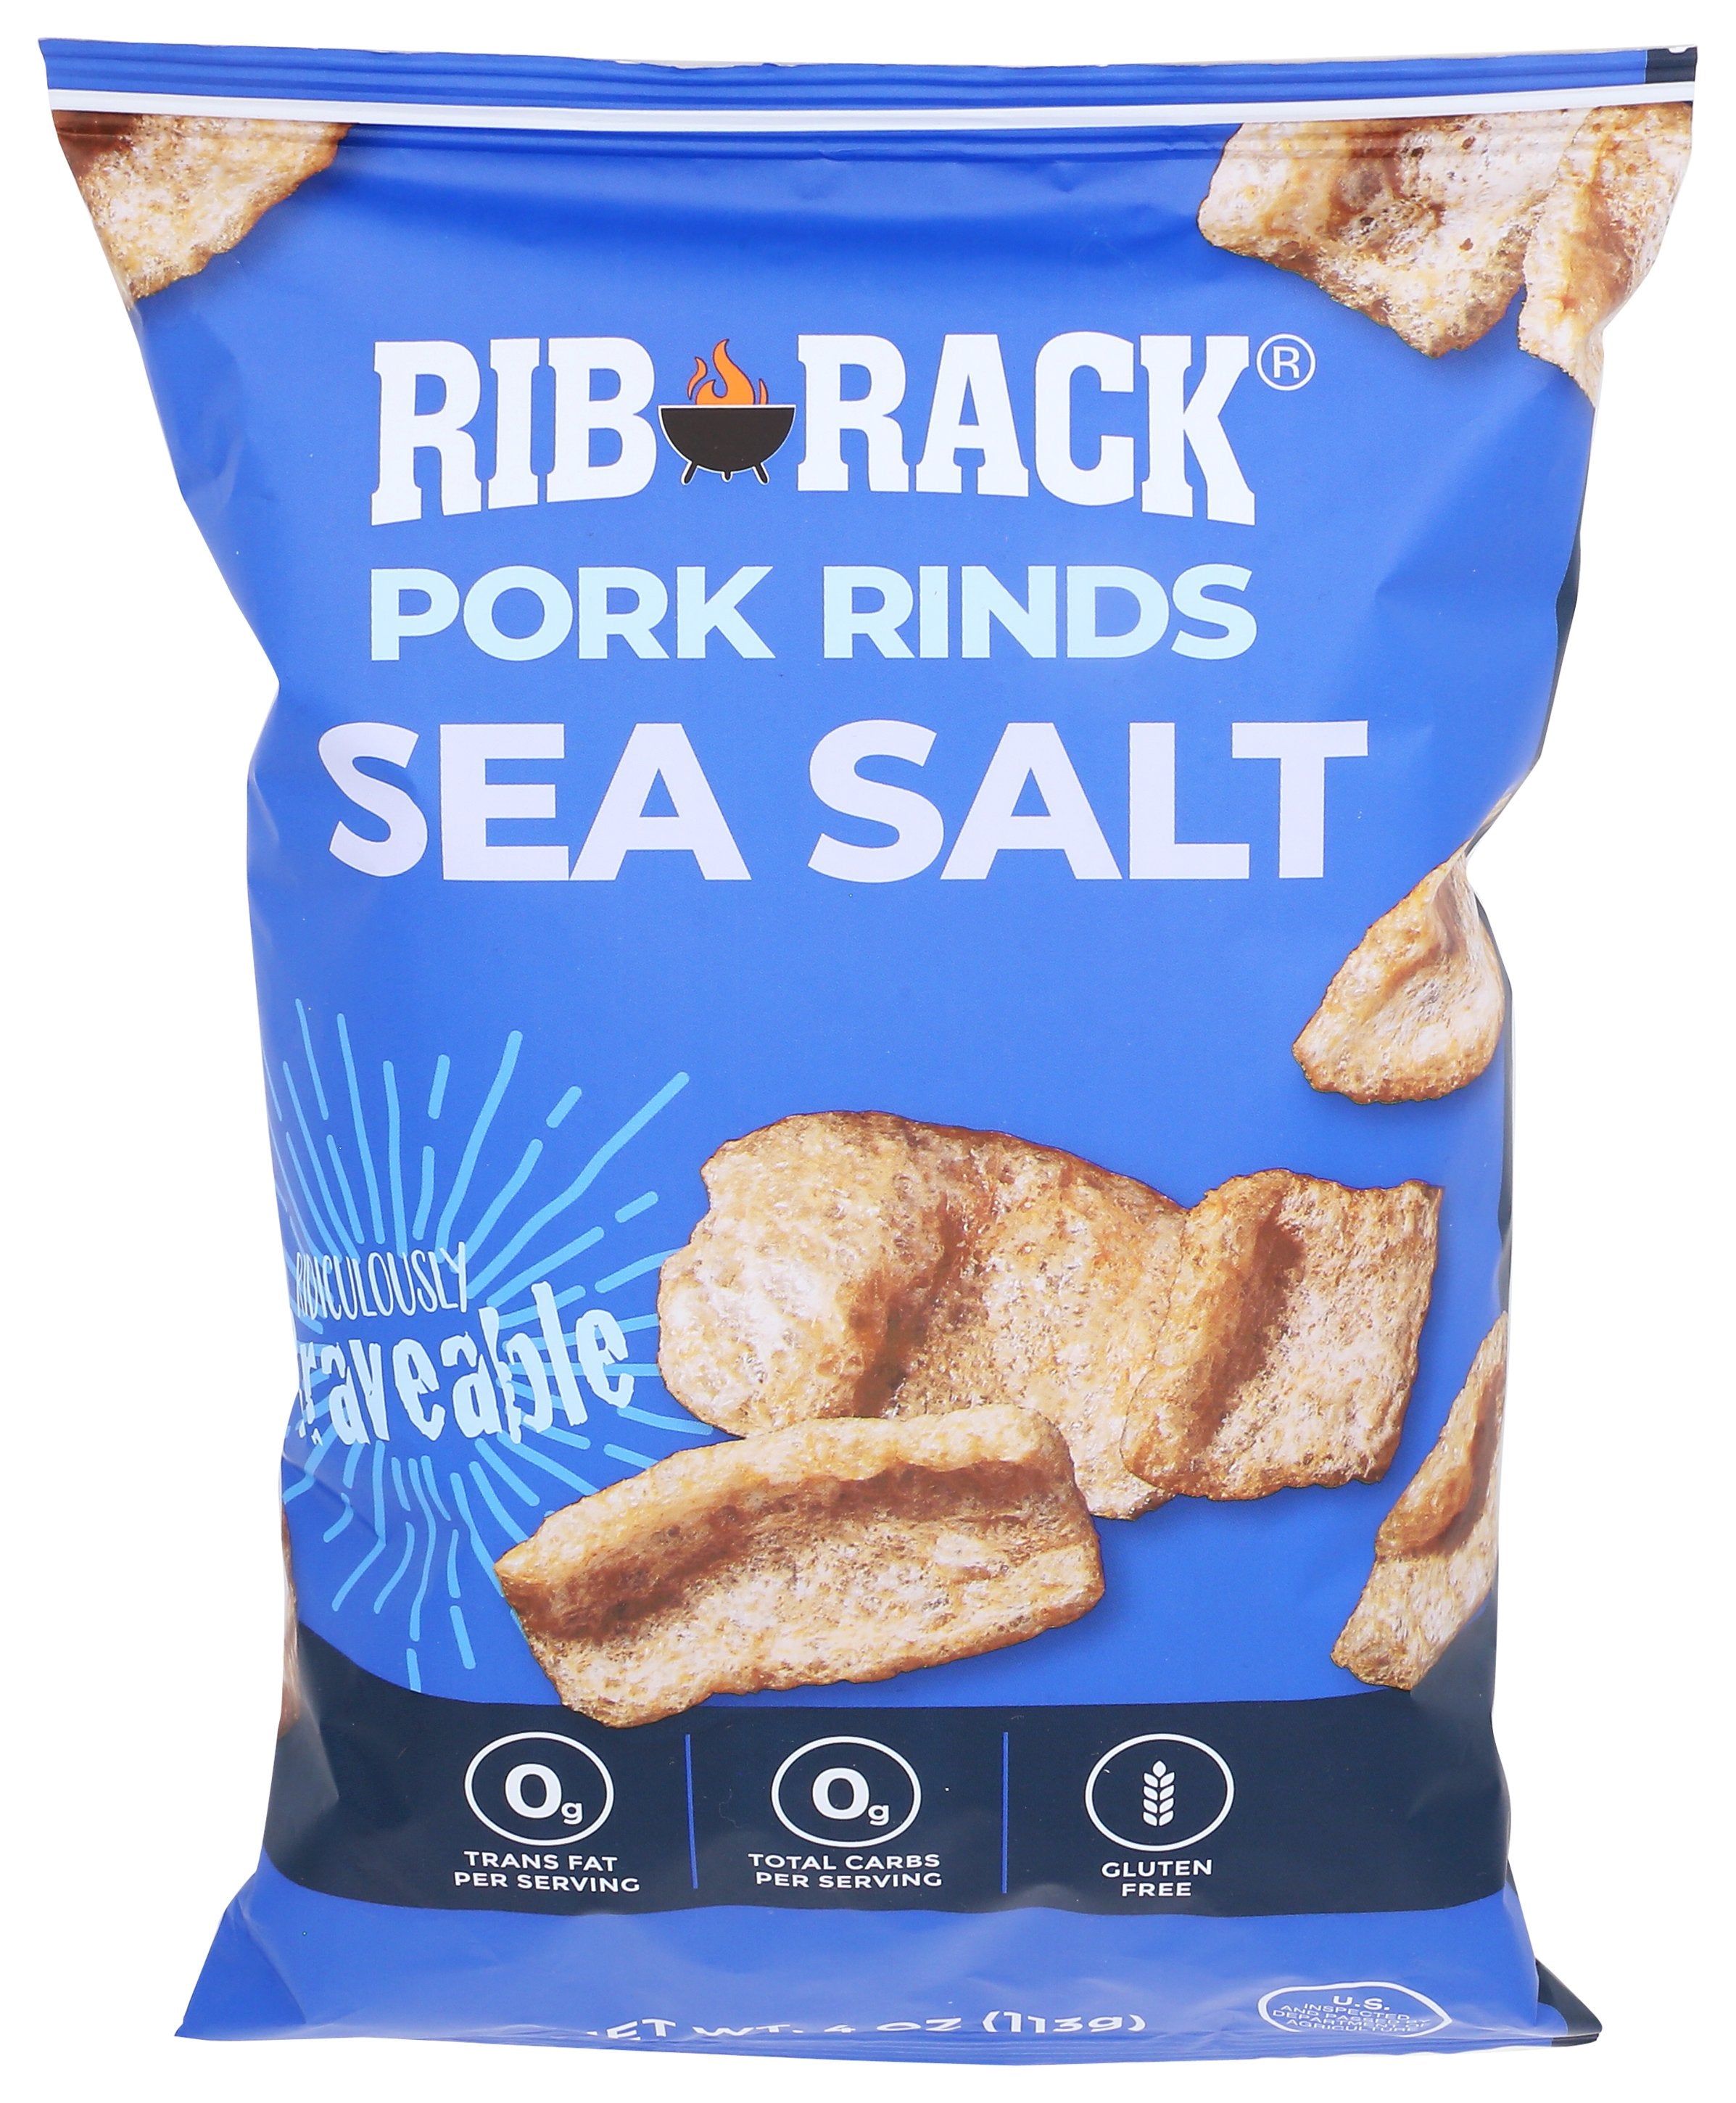 RIB RACK PORK RINDS SEA SALT - Case of 12